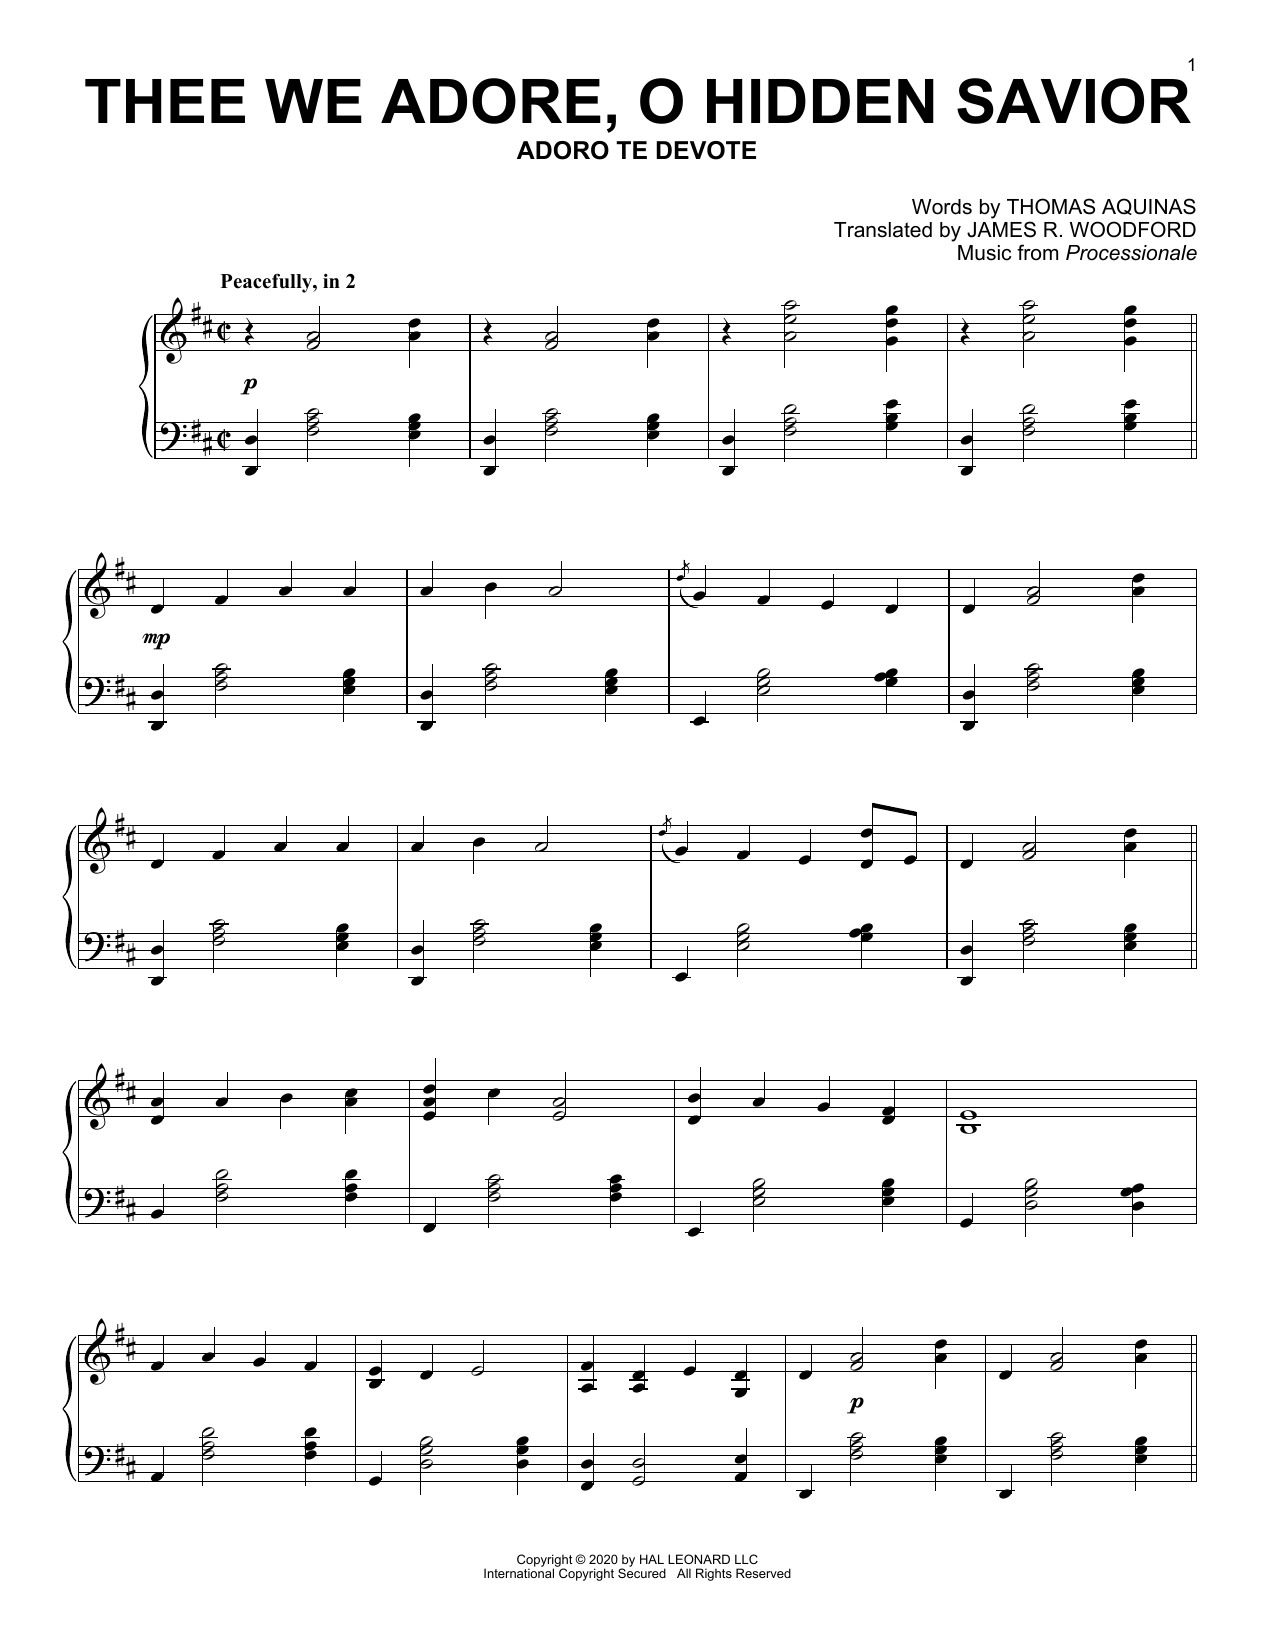 Thomas Aquinas Thee We Adore, O Hidden Savior Sheet Music Notes & Chords for Piano Solo - Download or Print PDF